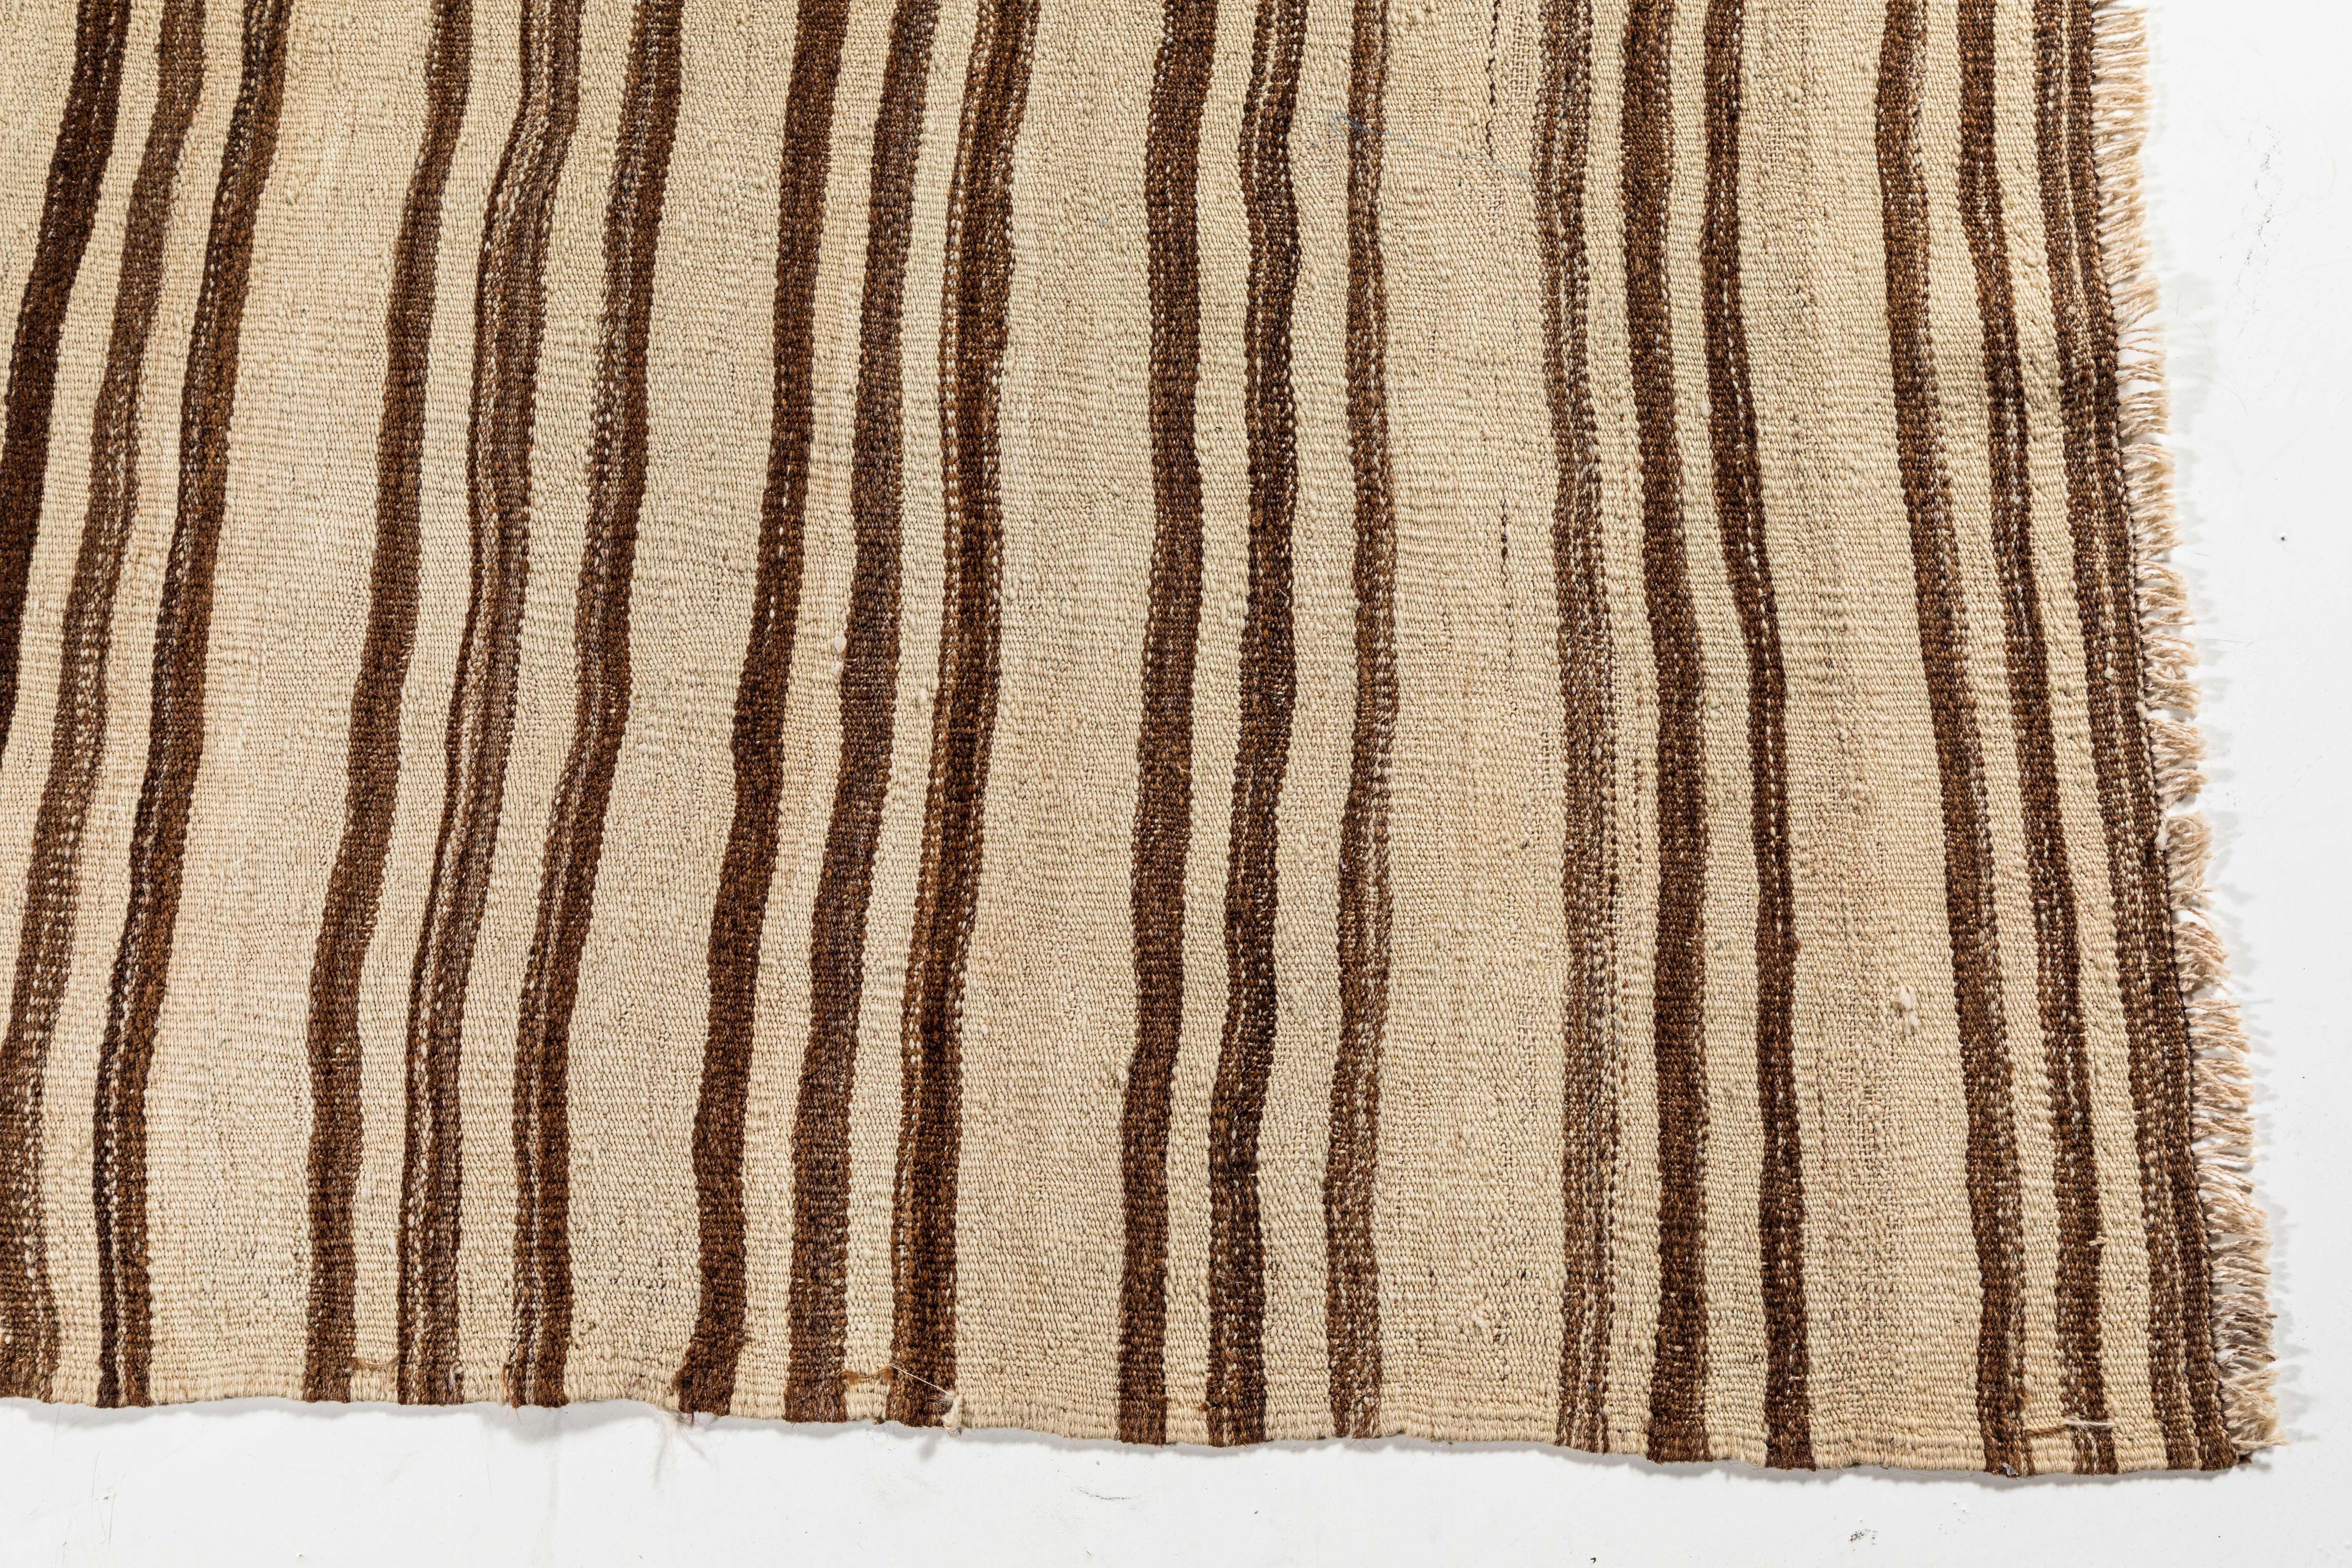 Vintage Konyan flat-weave rug with brown and natural stripes.